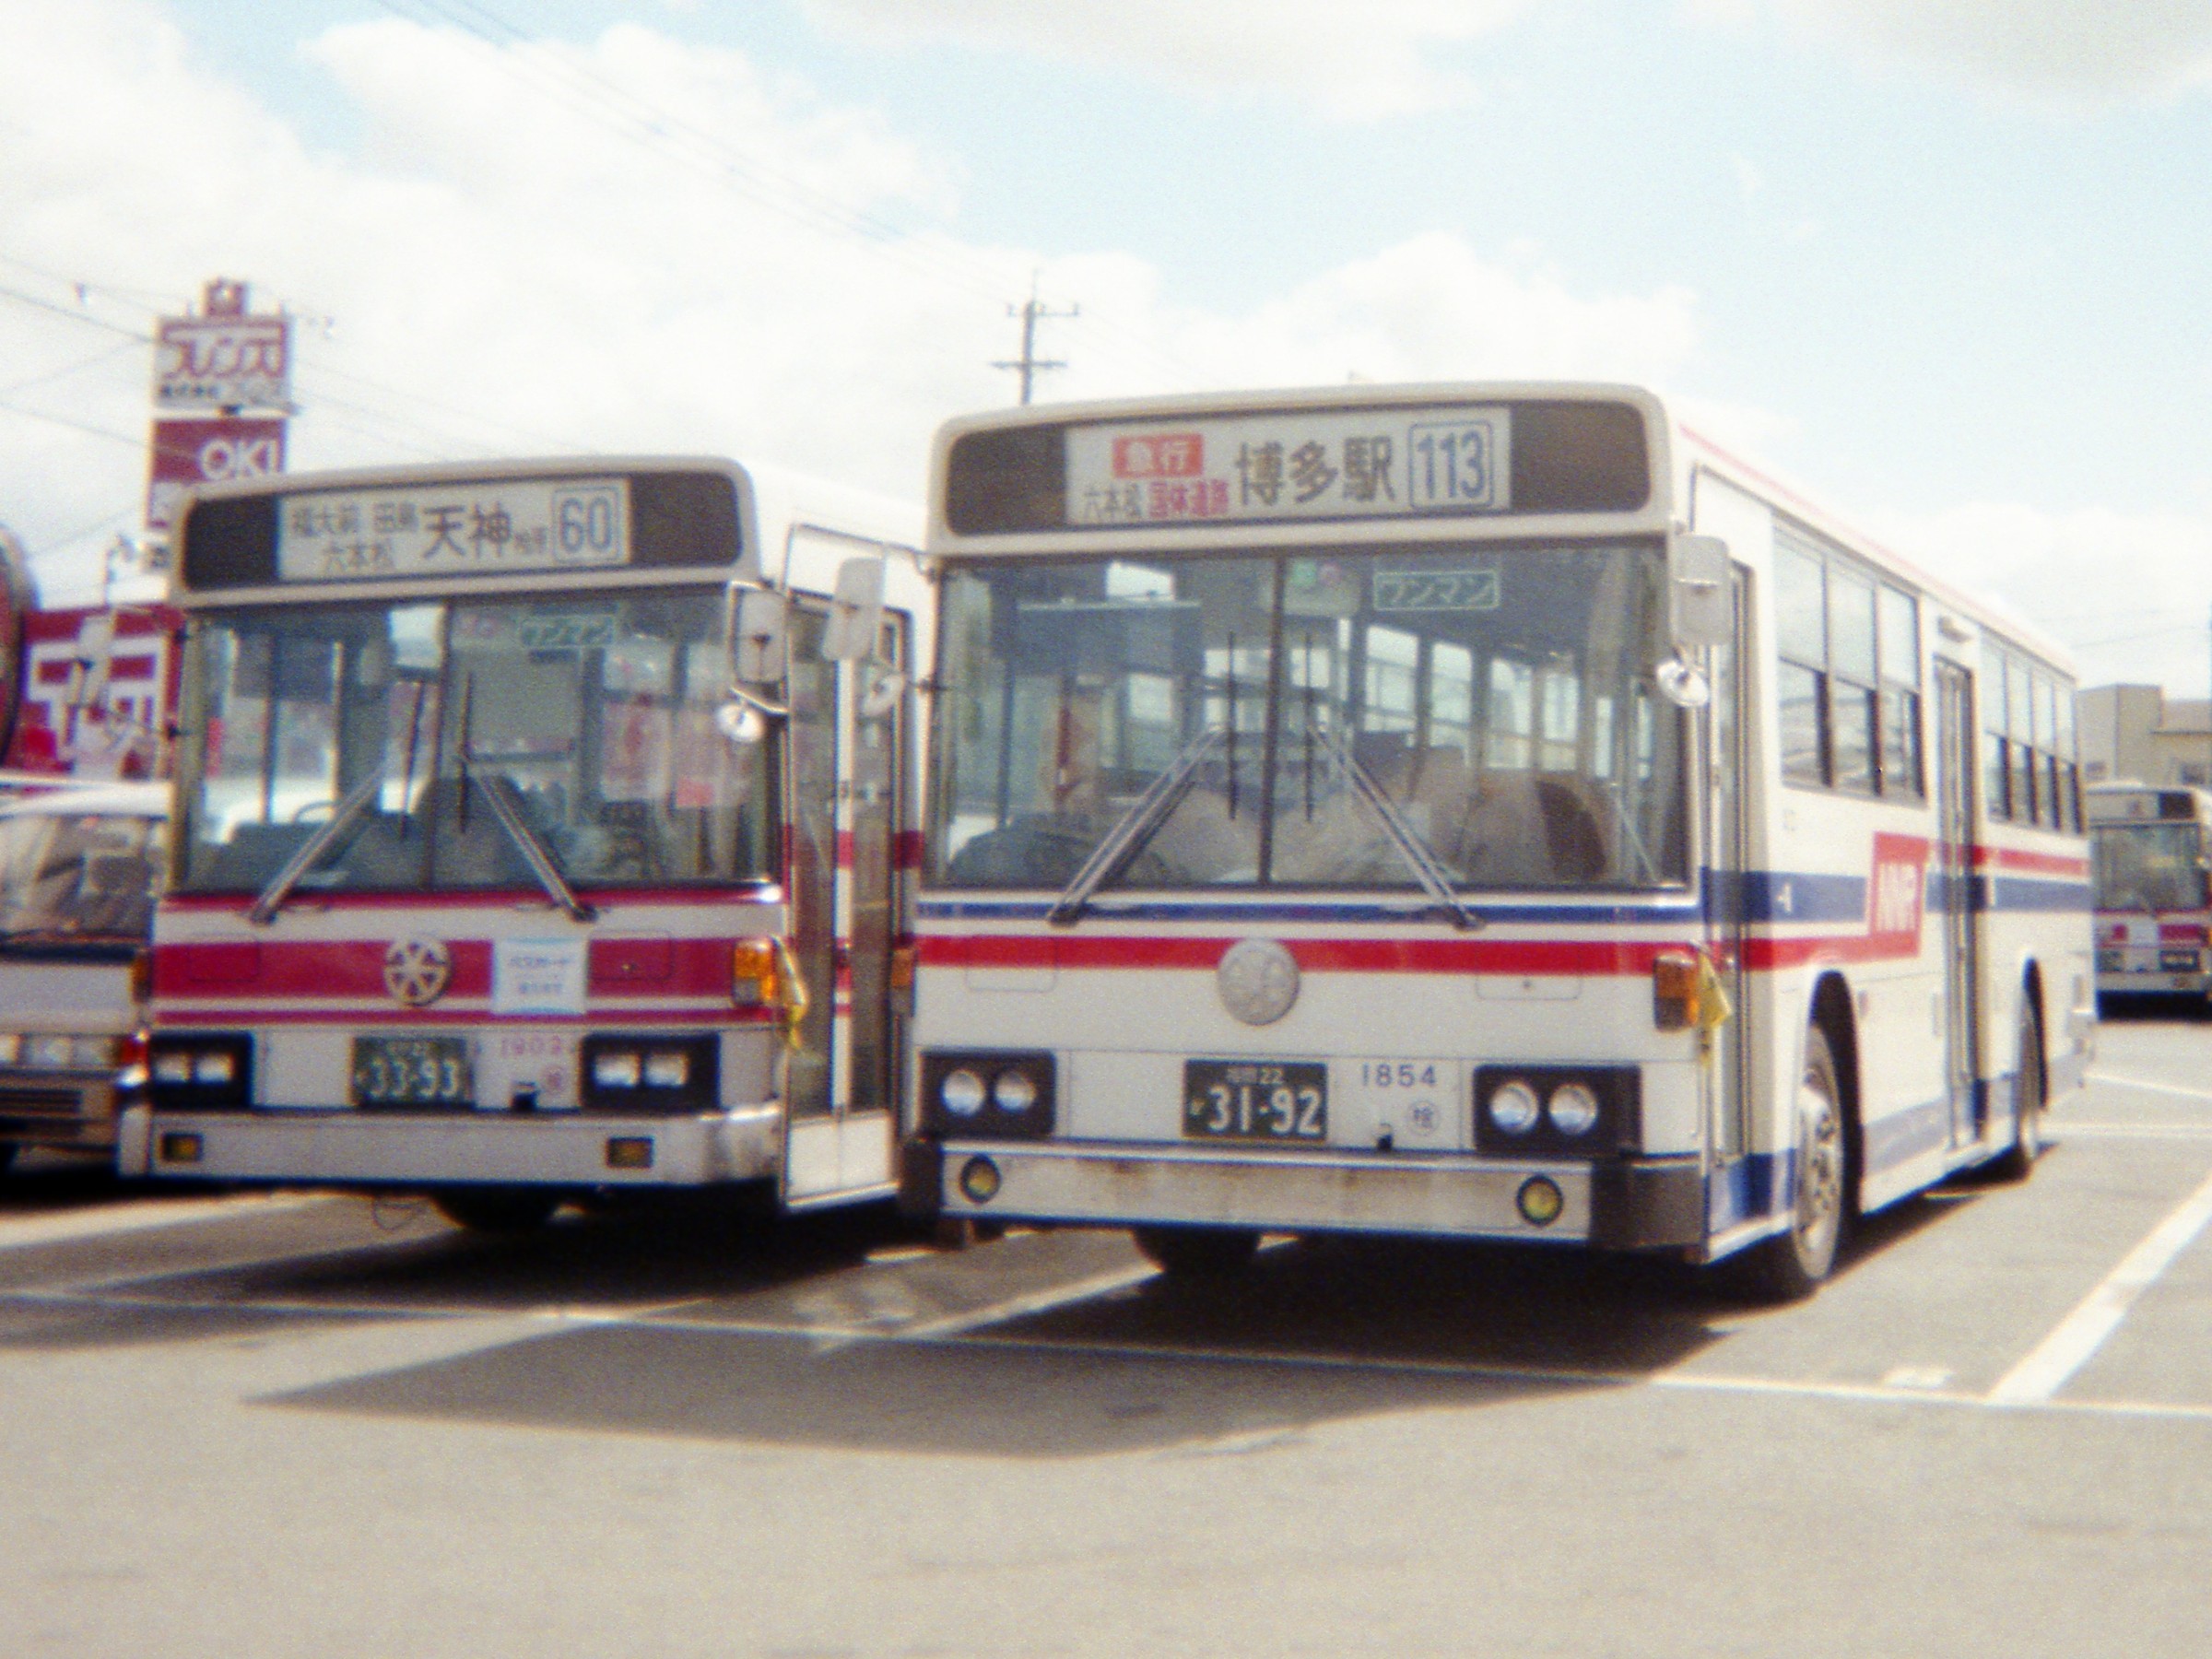 File:西鉄バス1854 桧原営業所所属 いすゞK-CJA520（1984年式）.jpg - Wikimedia Commons